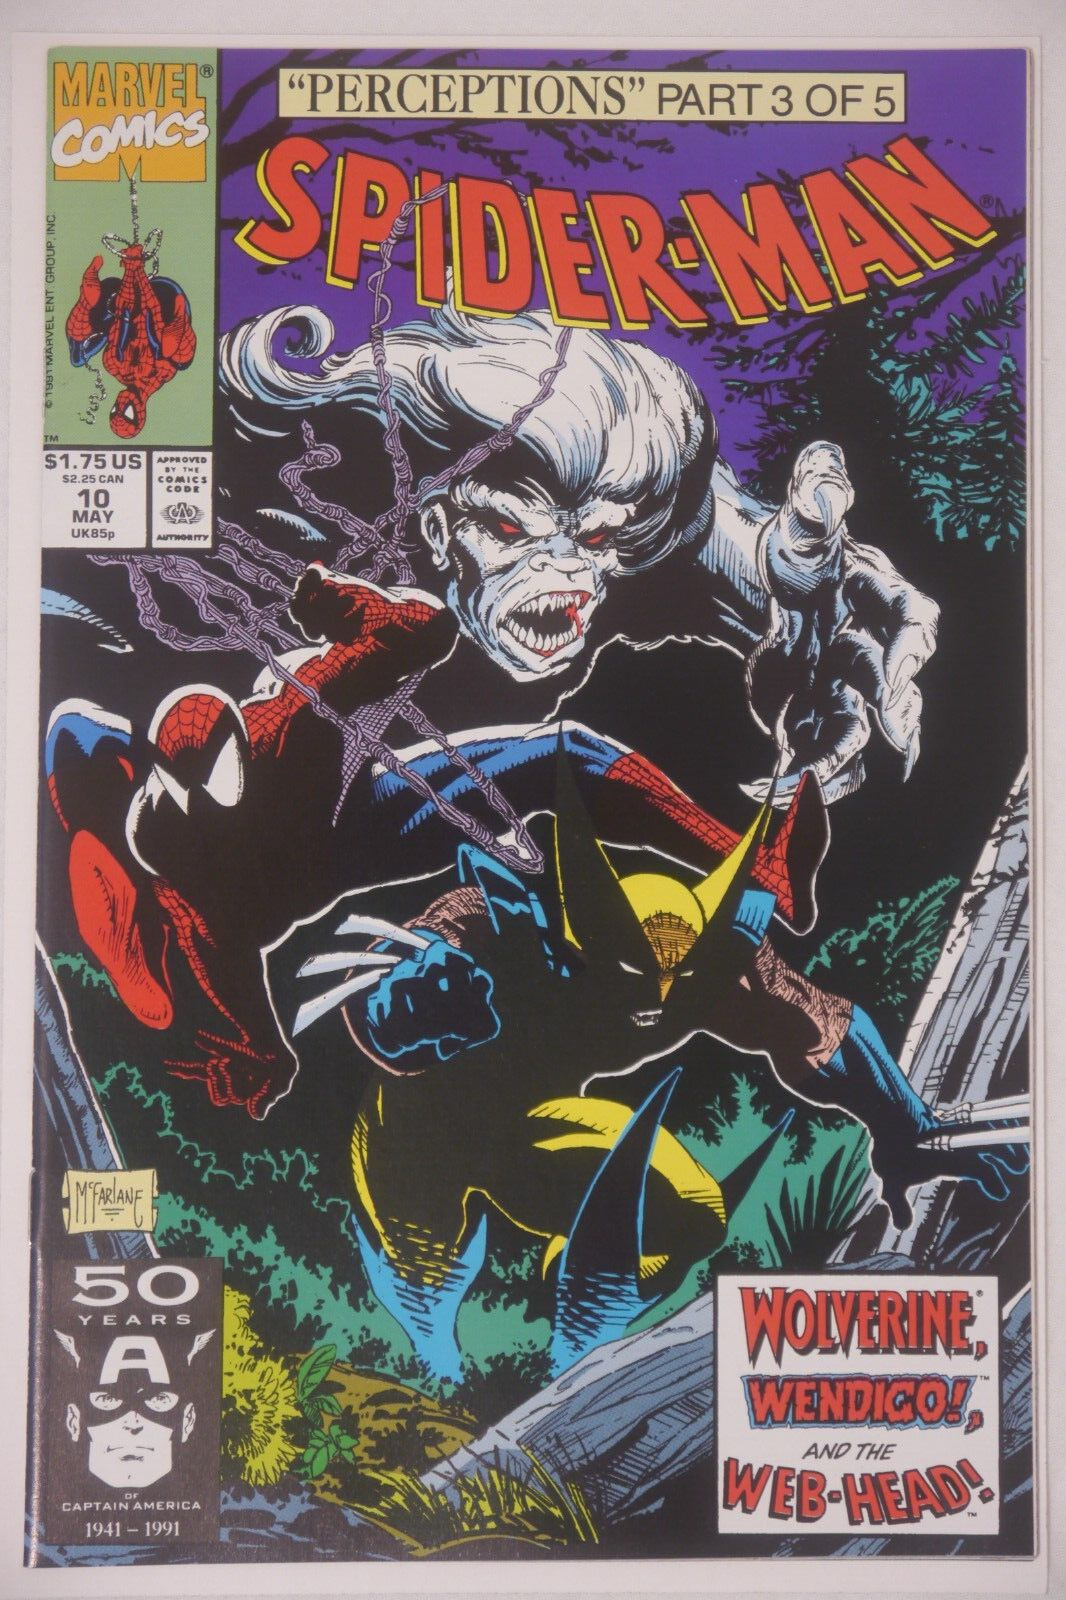 1991 Marvel Comics Spider-Man Perceptions Part 3 of 5 Issue #10